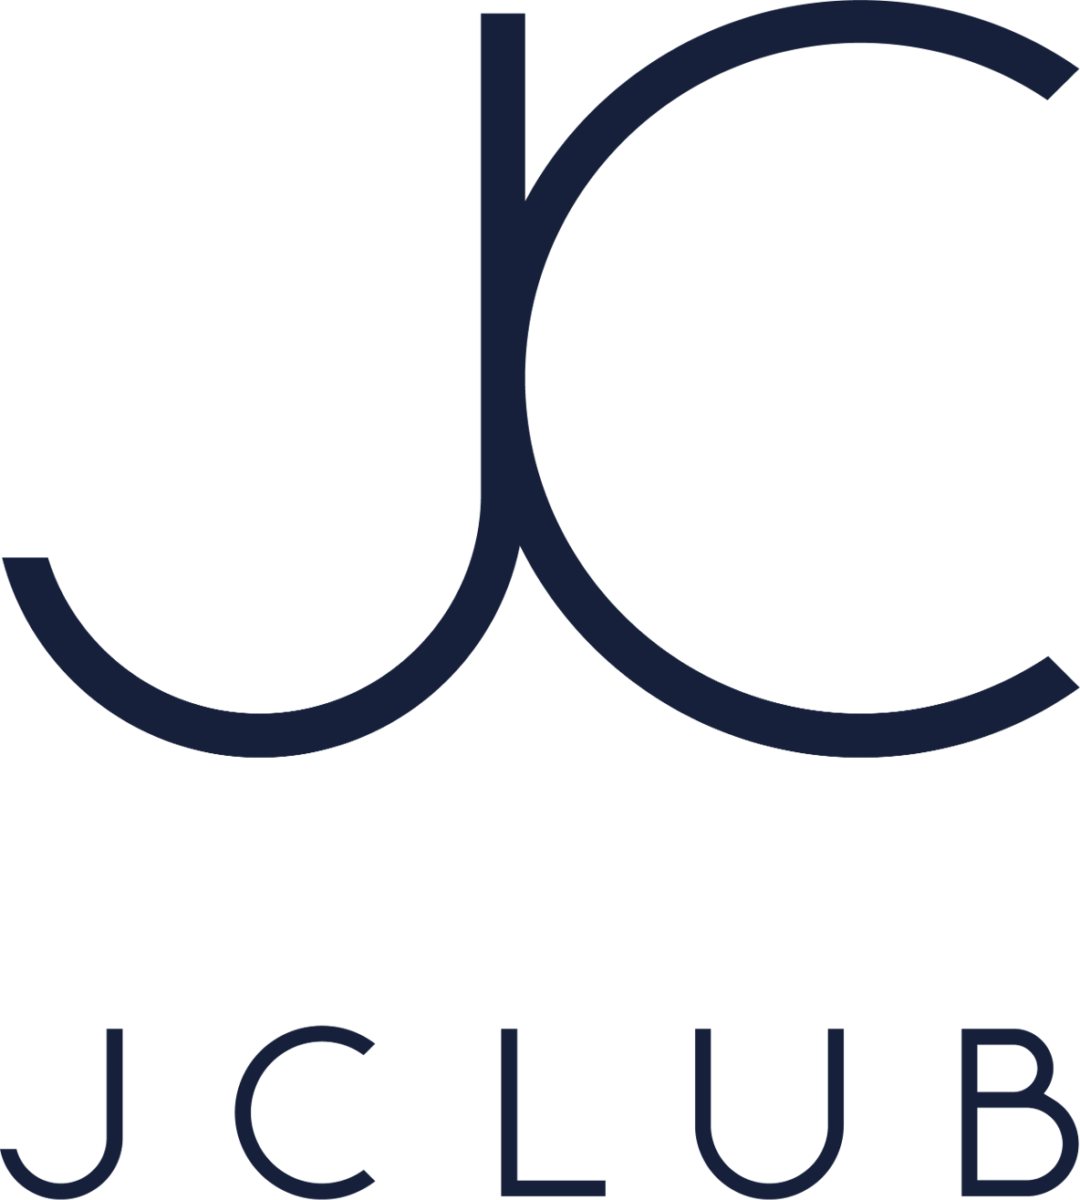 Profile J-Club International Holding